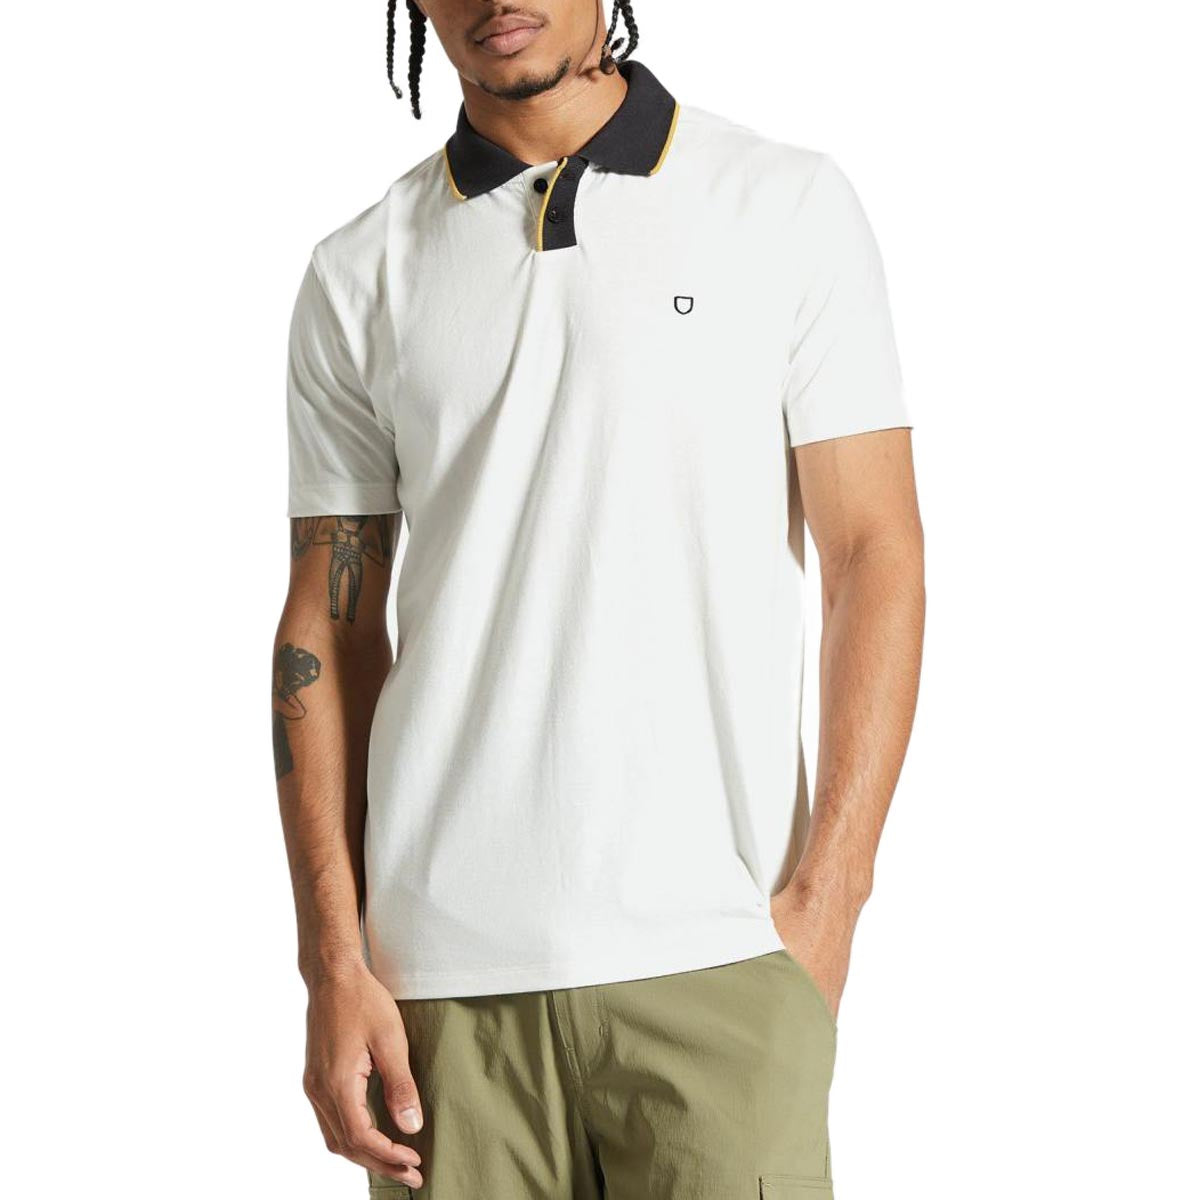 Brixton Mod Flex Polo Shirt - Off White/Black image 1